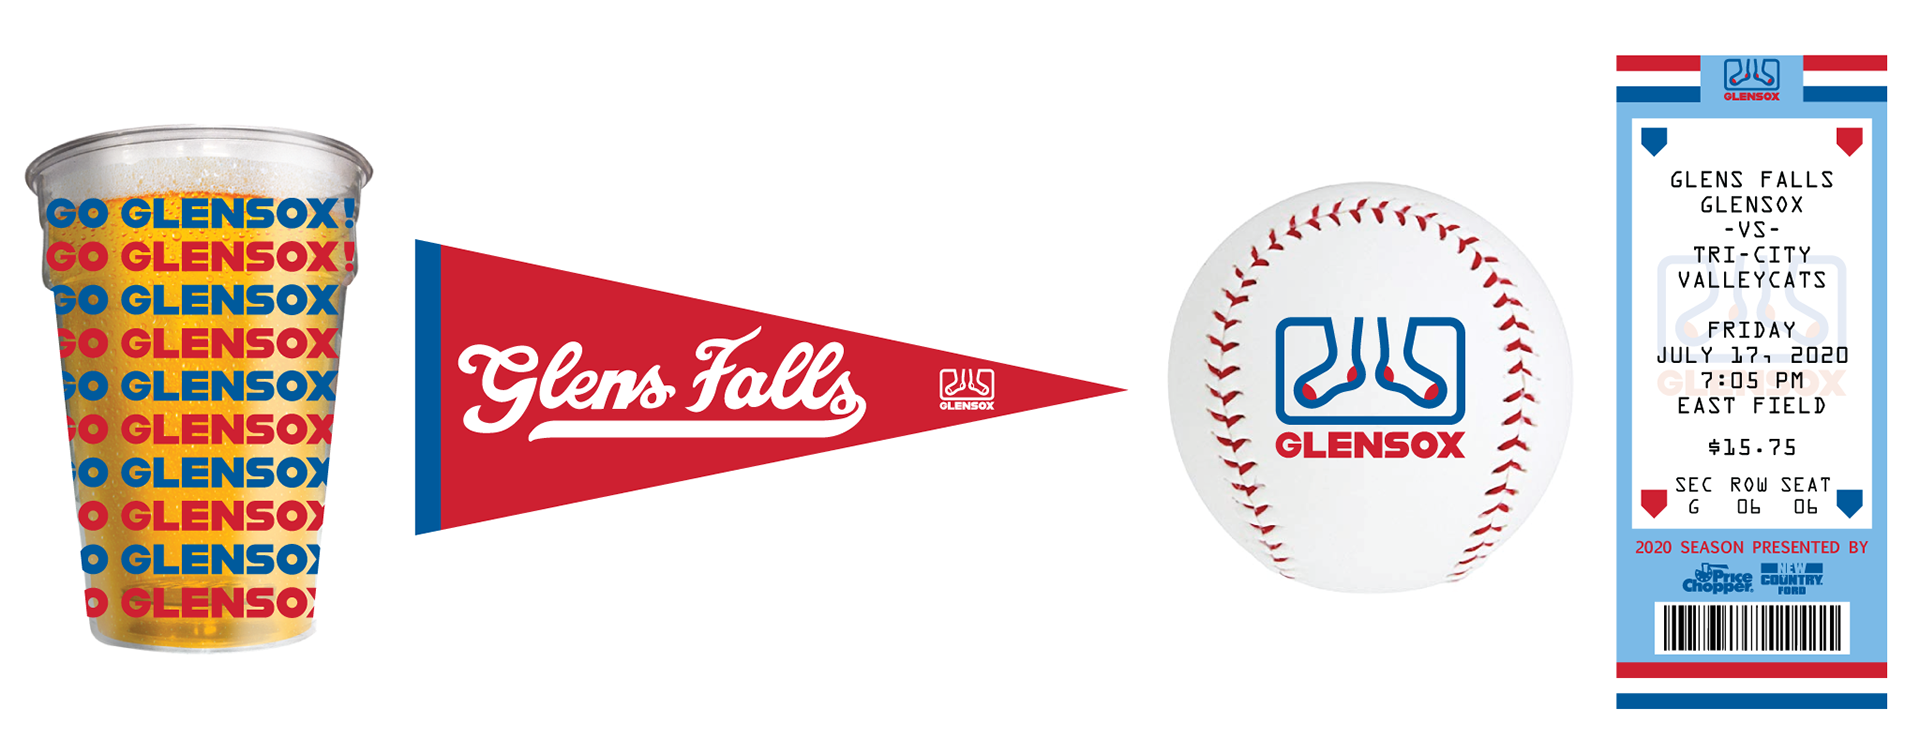 RAL Graphic Designs - Glens Falls GlenSox